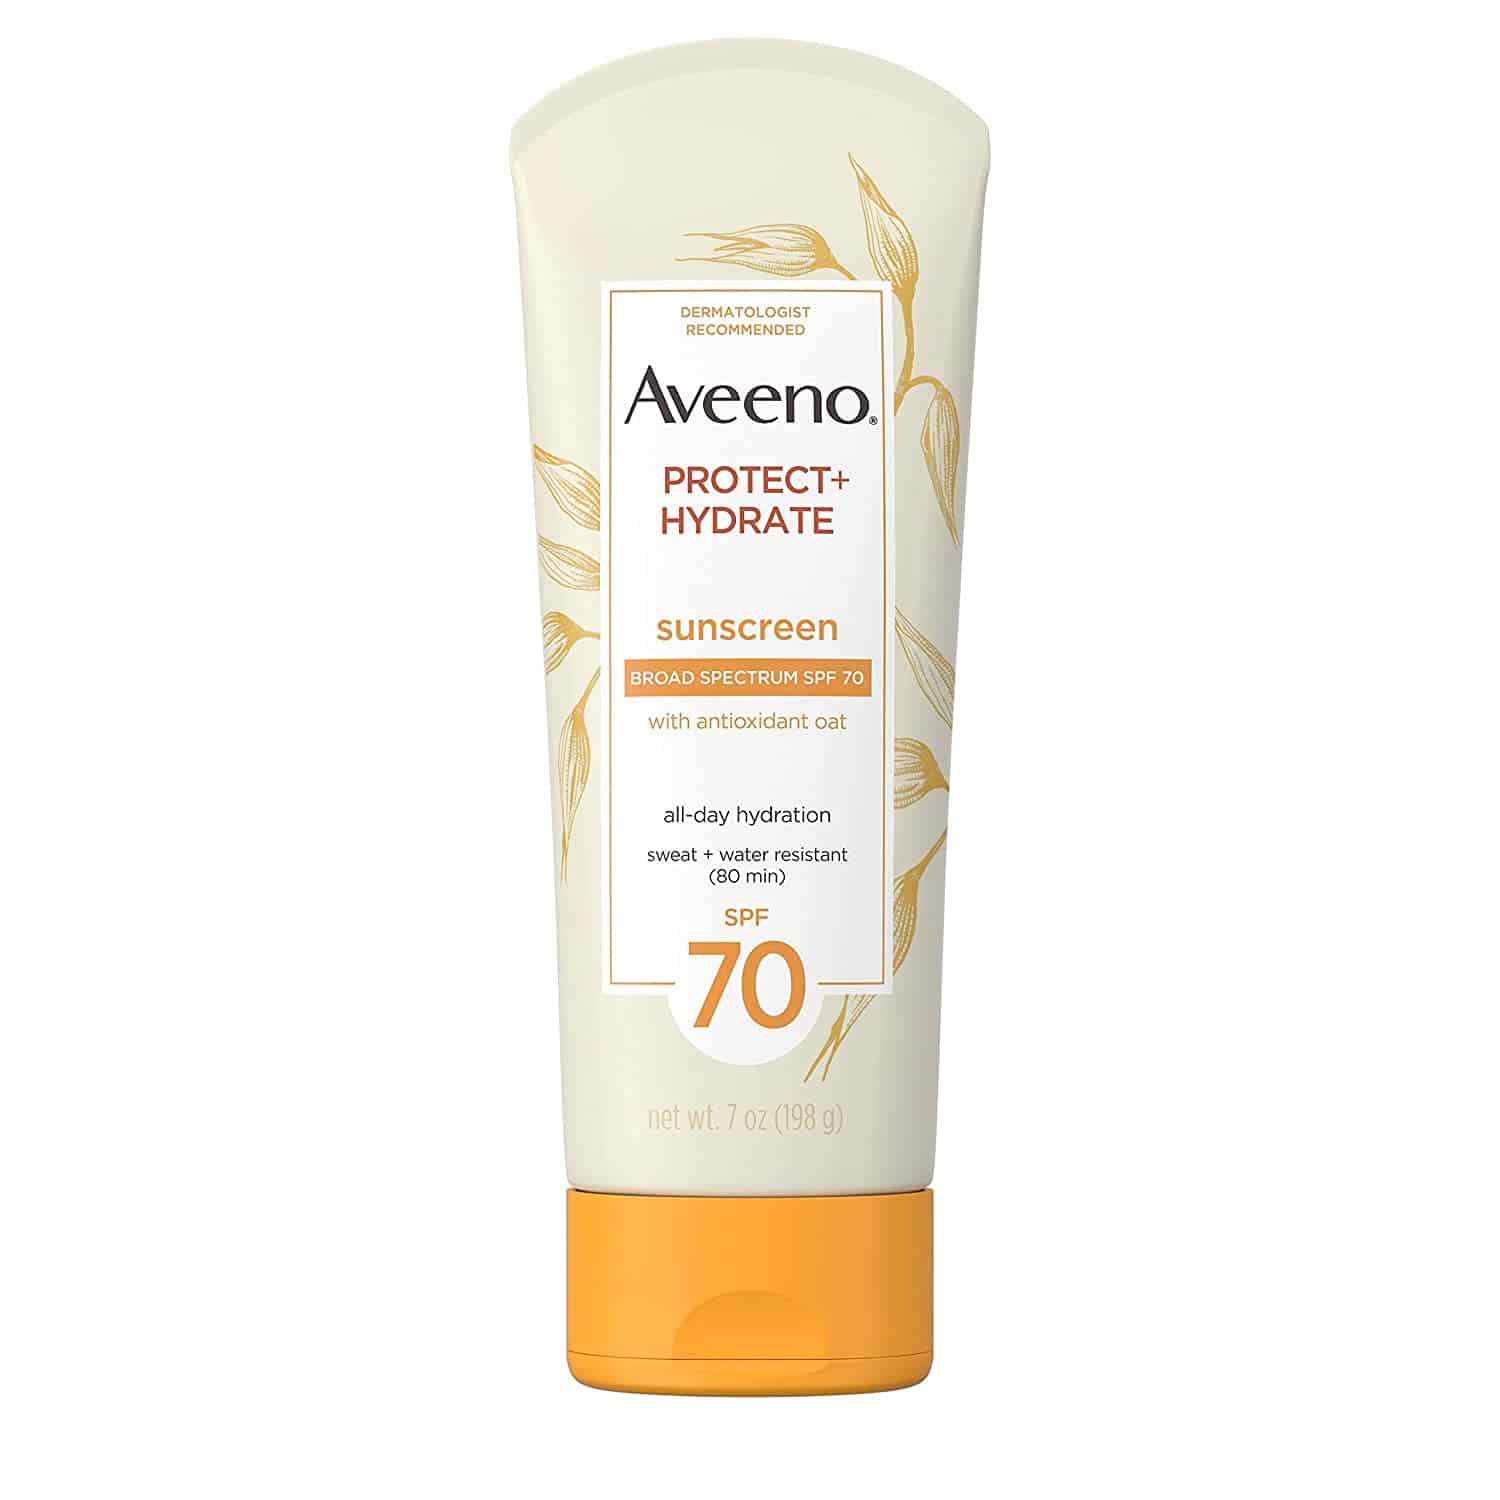 Aveeno Protect + Hydrate Sunscreen sanwarna.pk